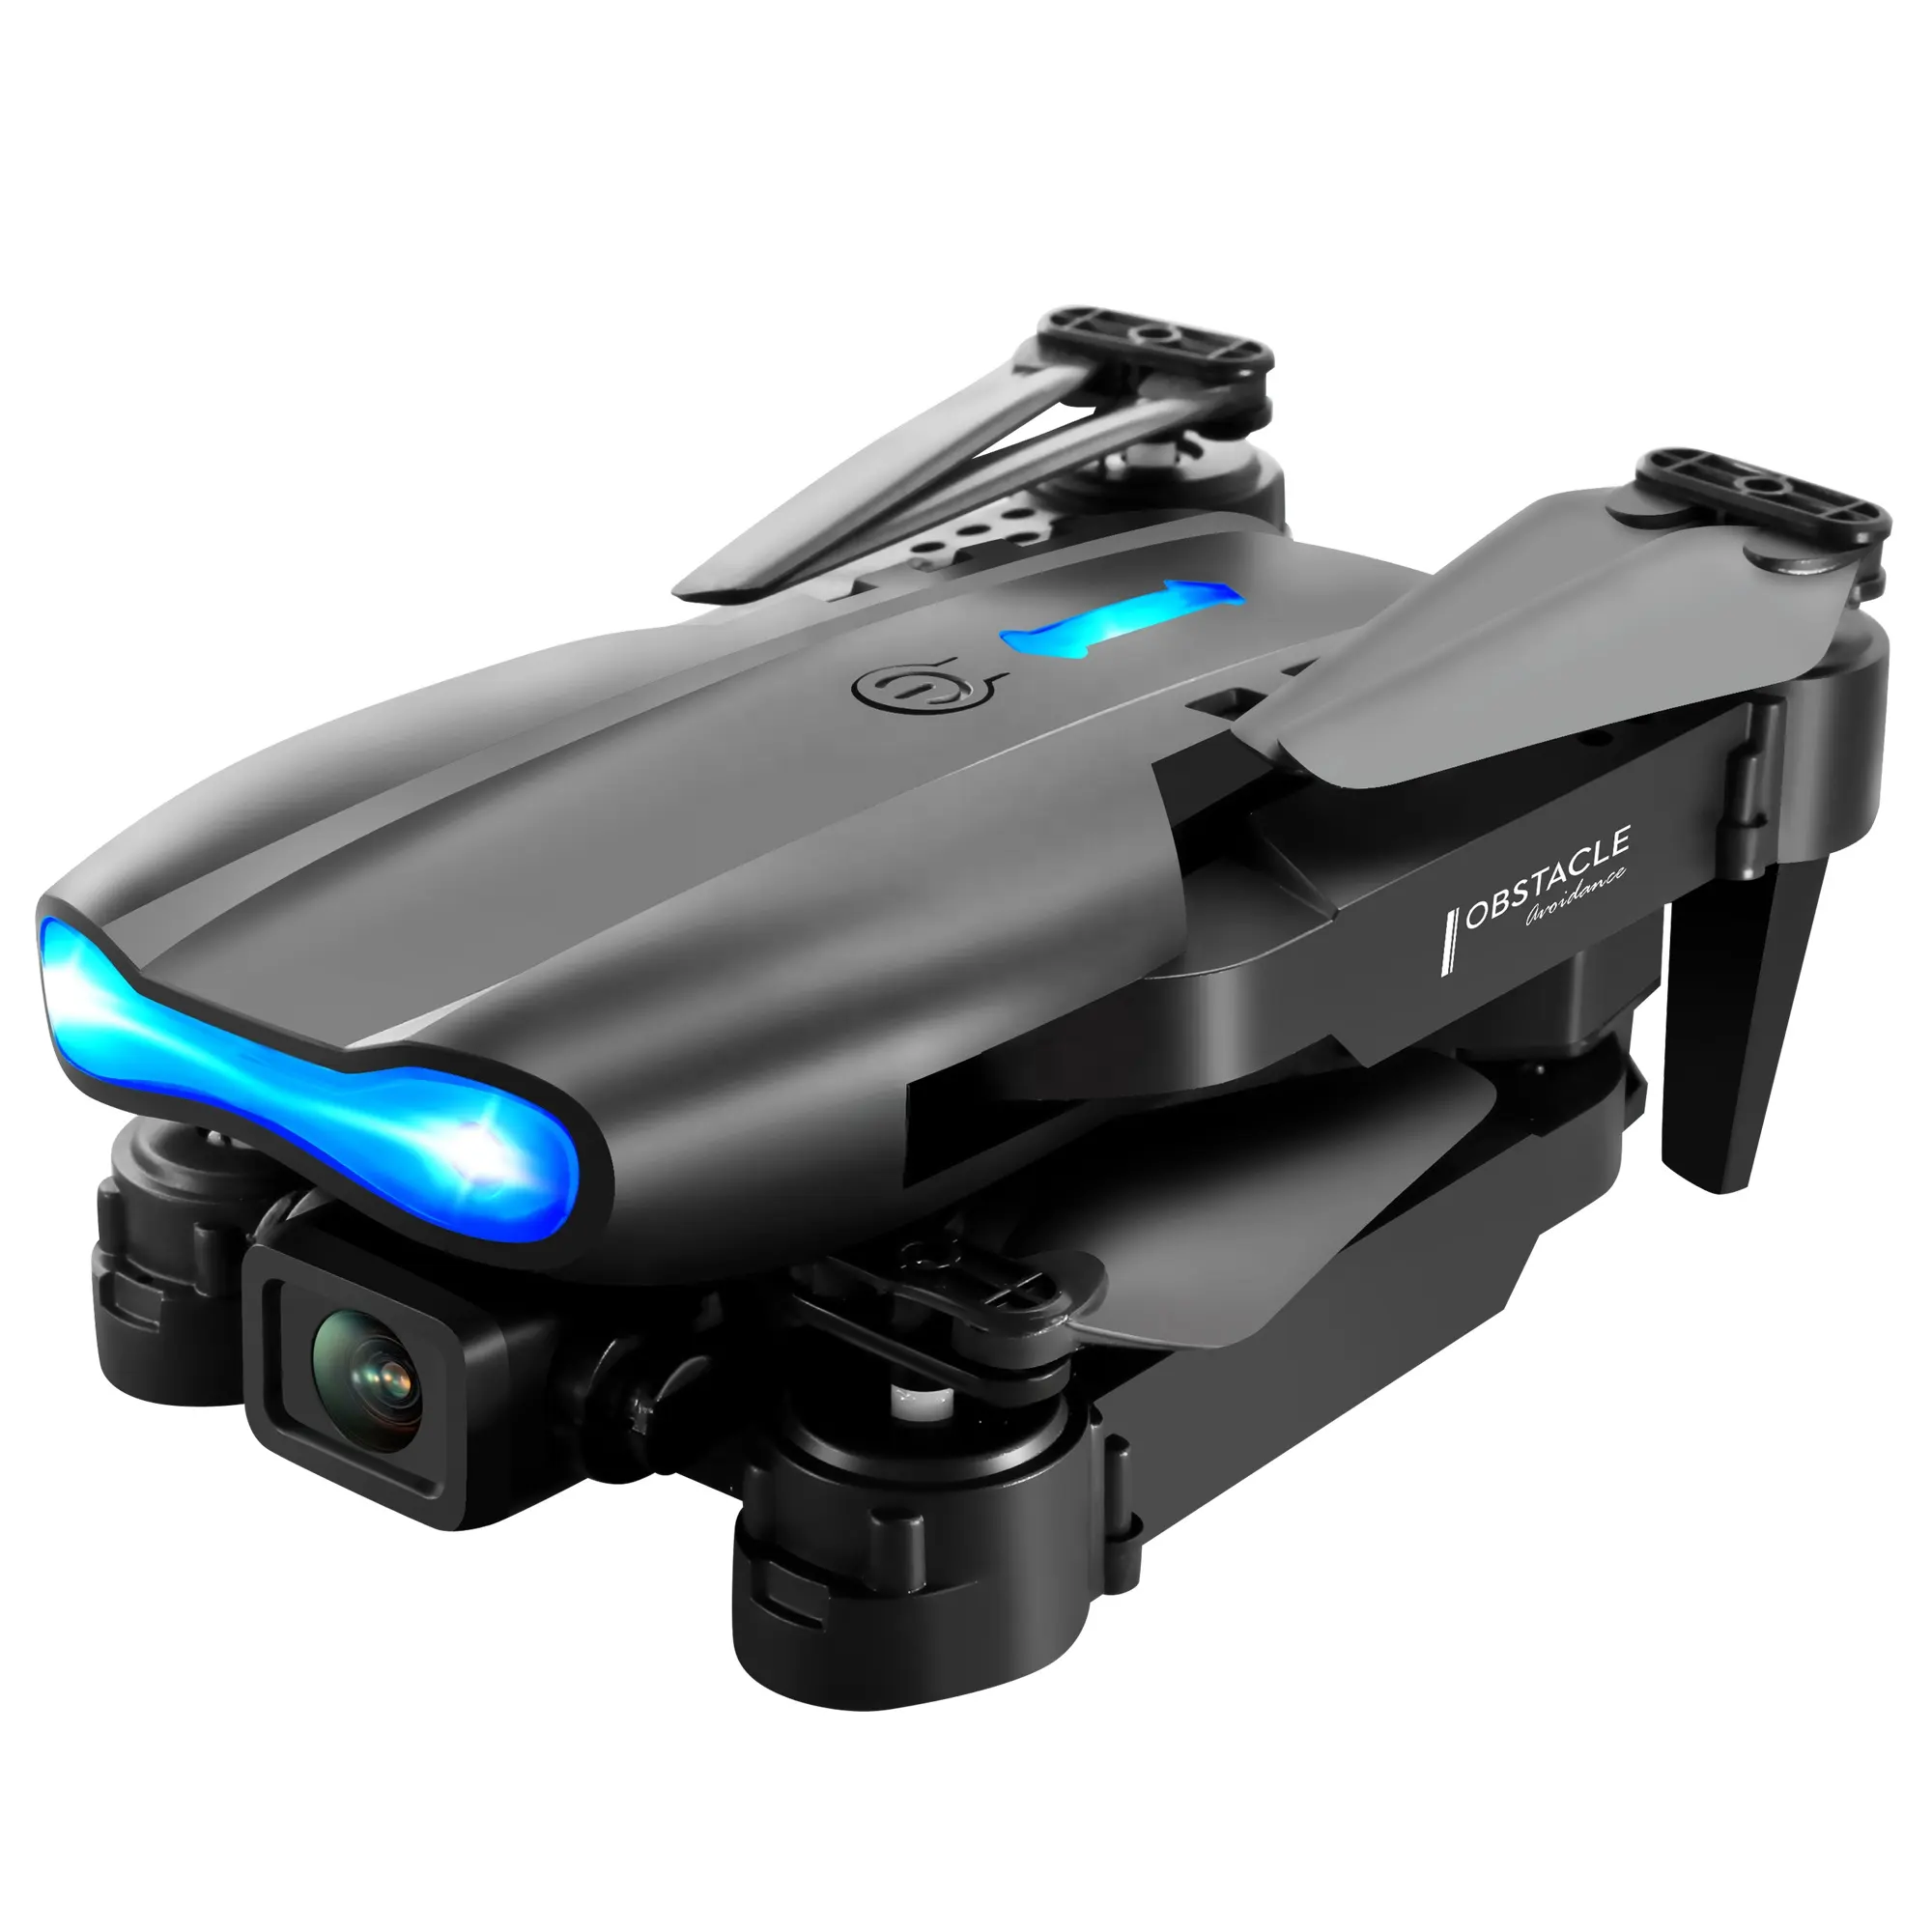 2022 Wholesaler Remote Control Folding Drone 4K hd Camara E99 Pro Drone Battery Single or dual camera optional